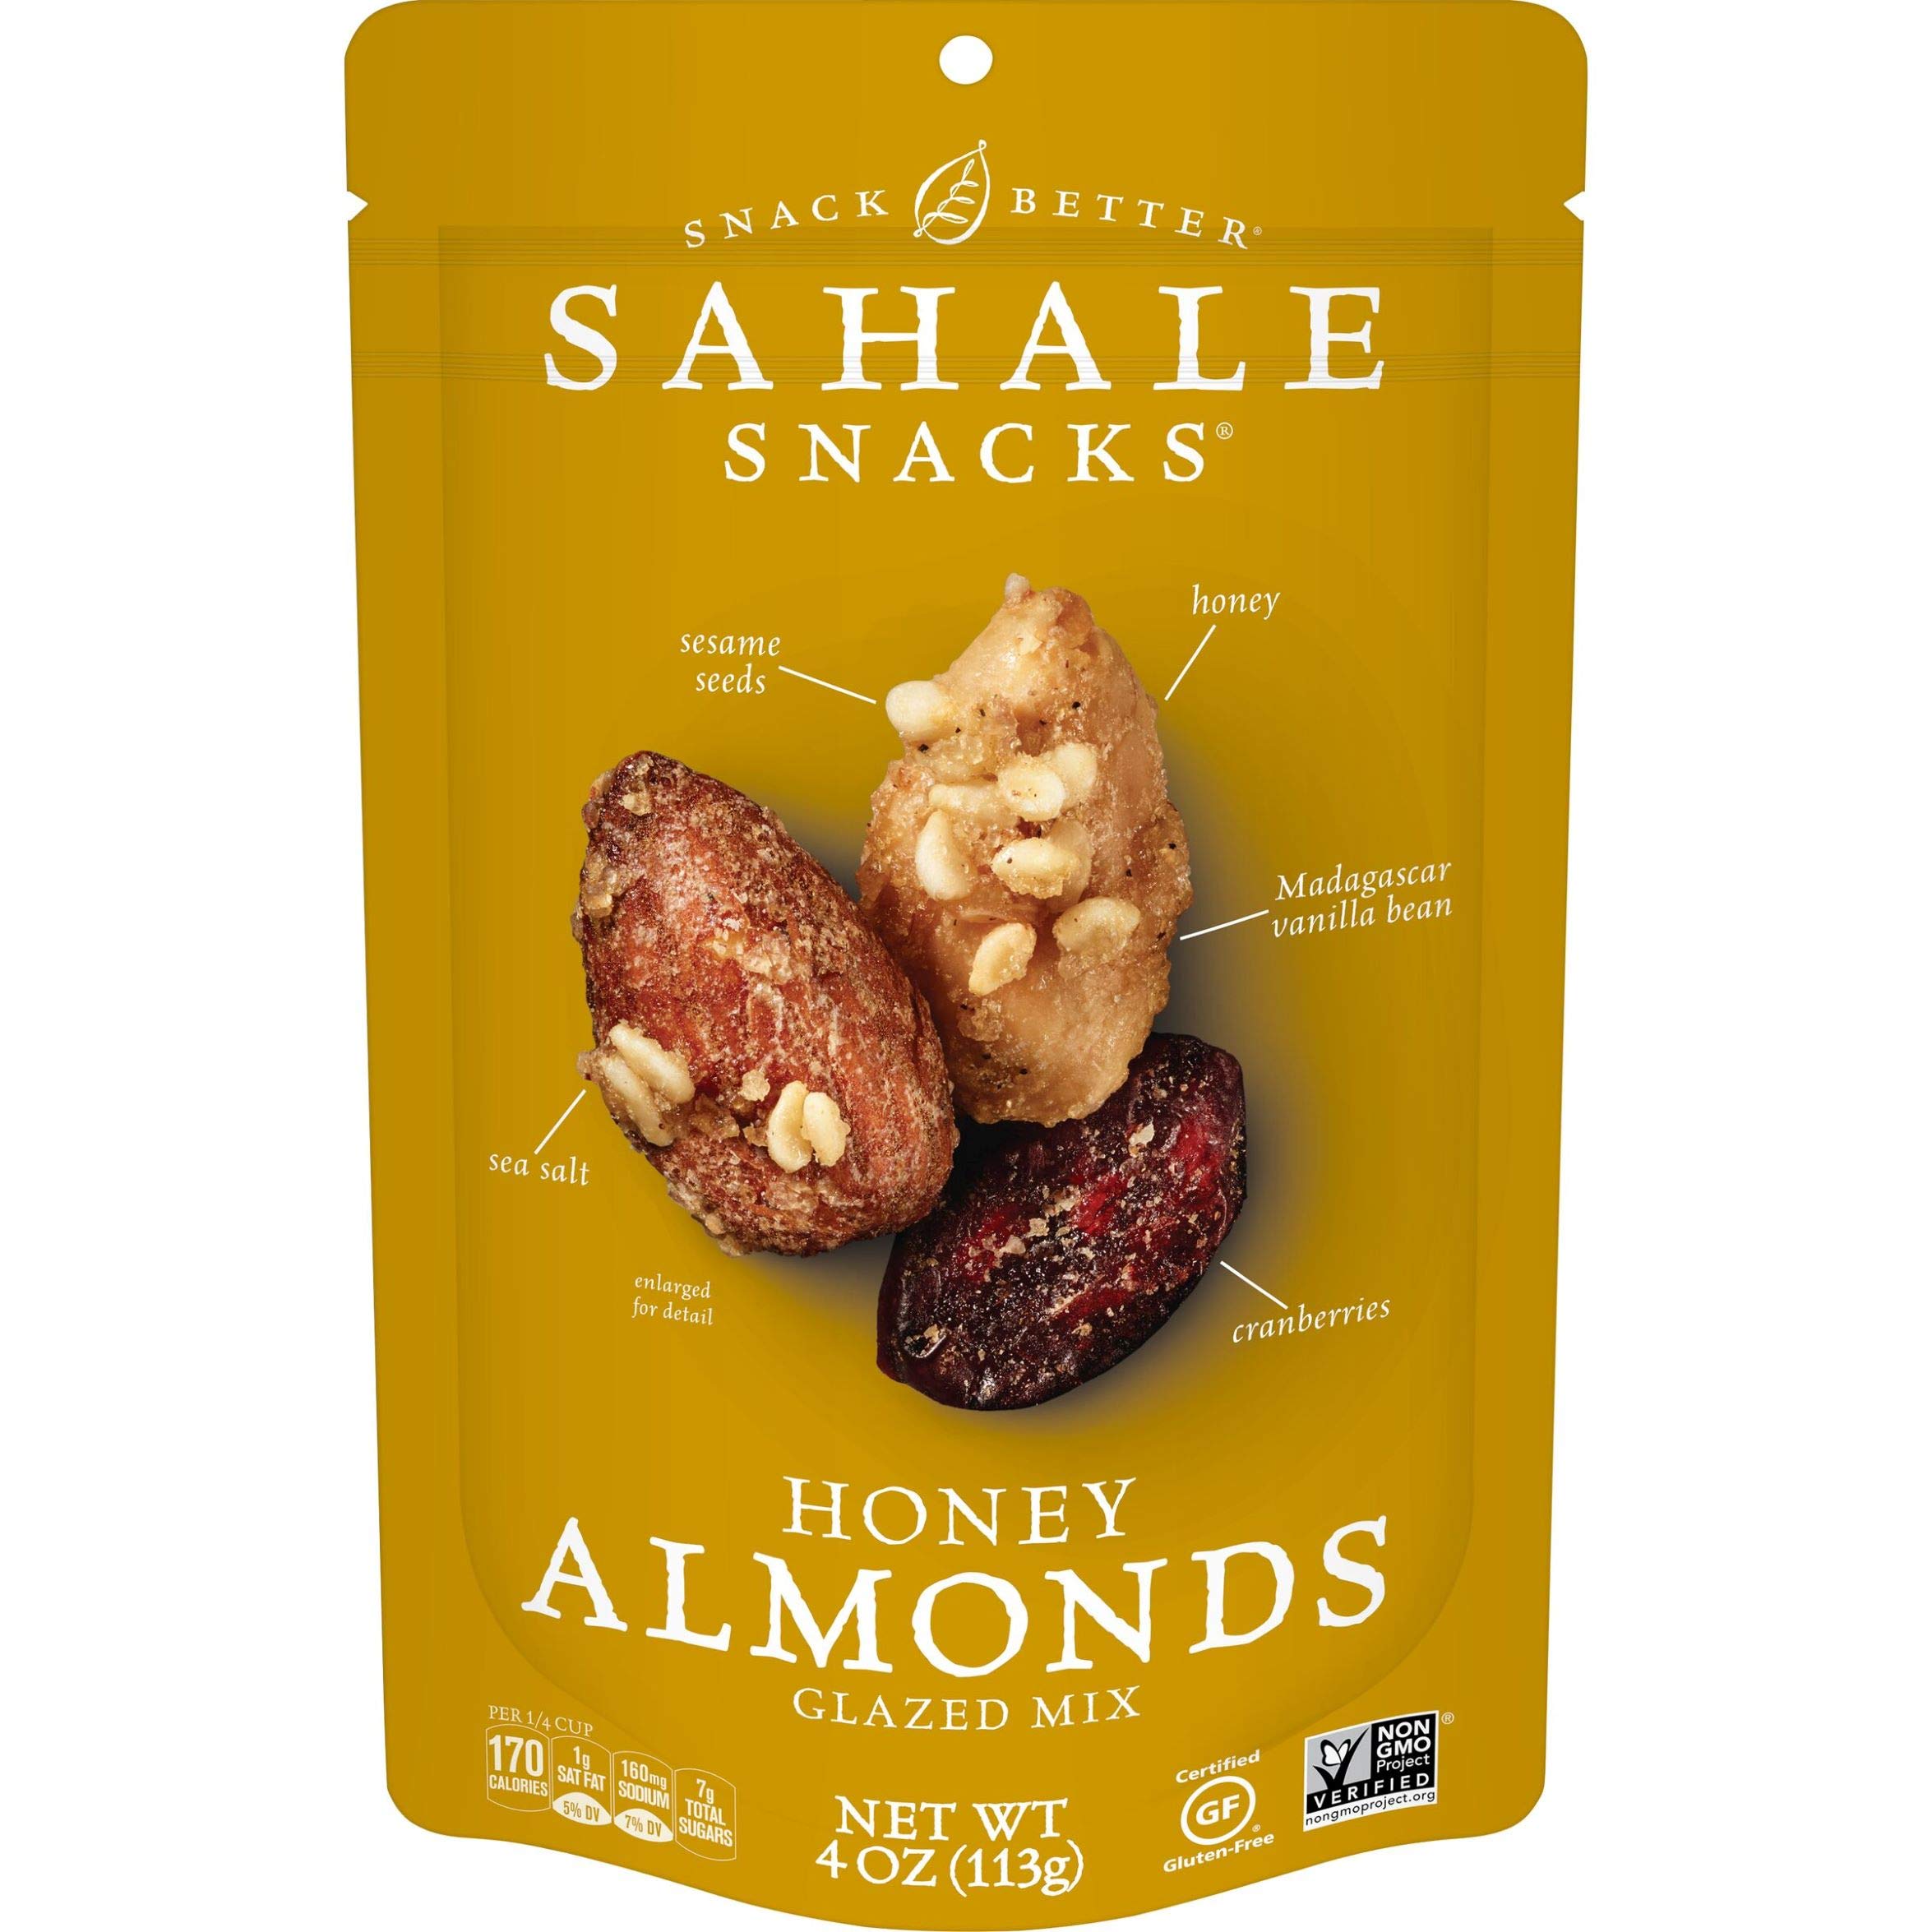 6-Pack 4-Oz Sahale Snacks Glazed Mix (Honey Almonds) $10.45 ($1.74 each) w/ S&S + Free Shipping w/ Prime or on $25+